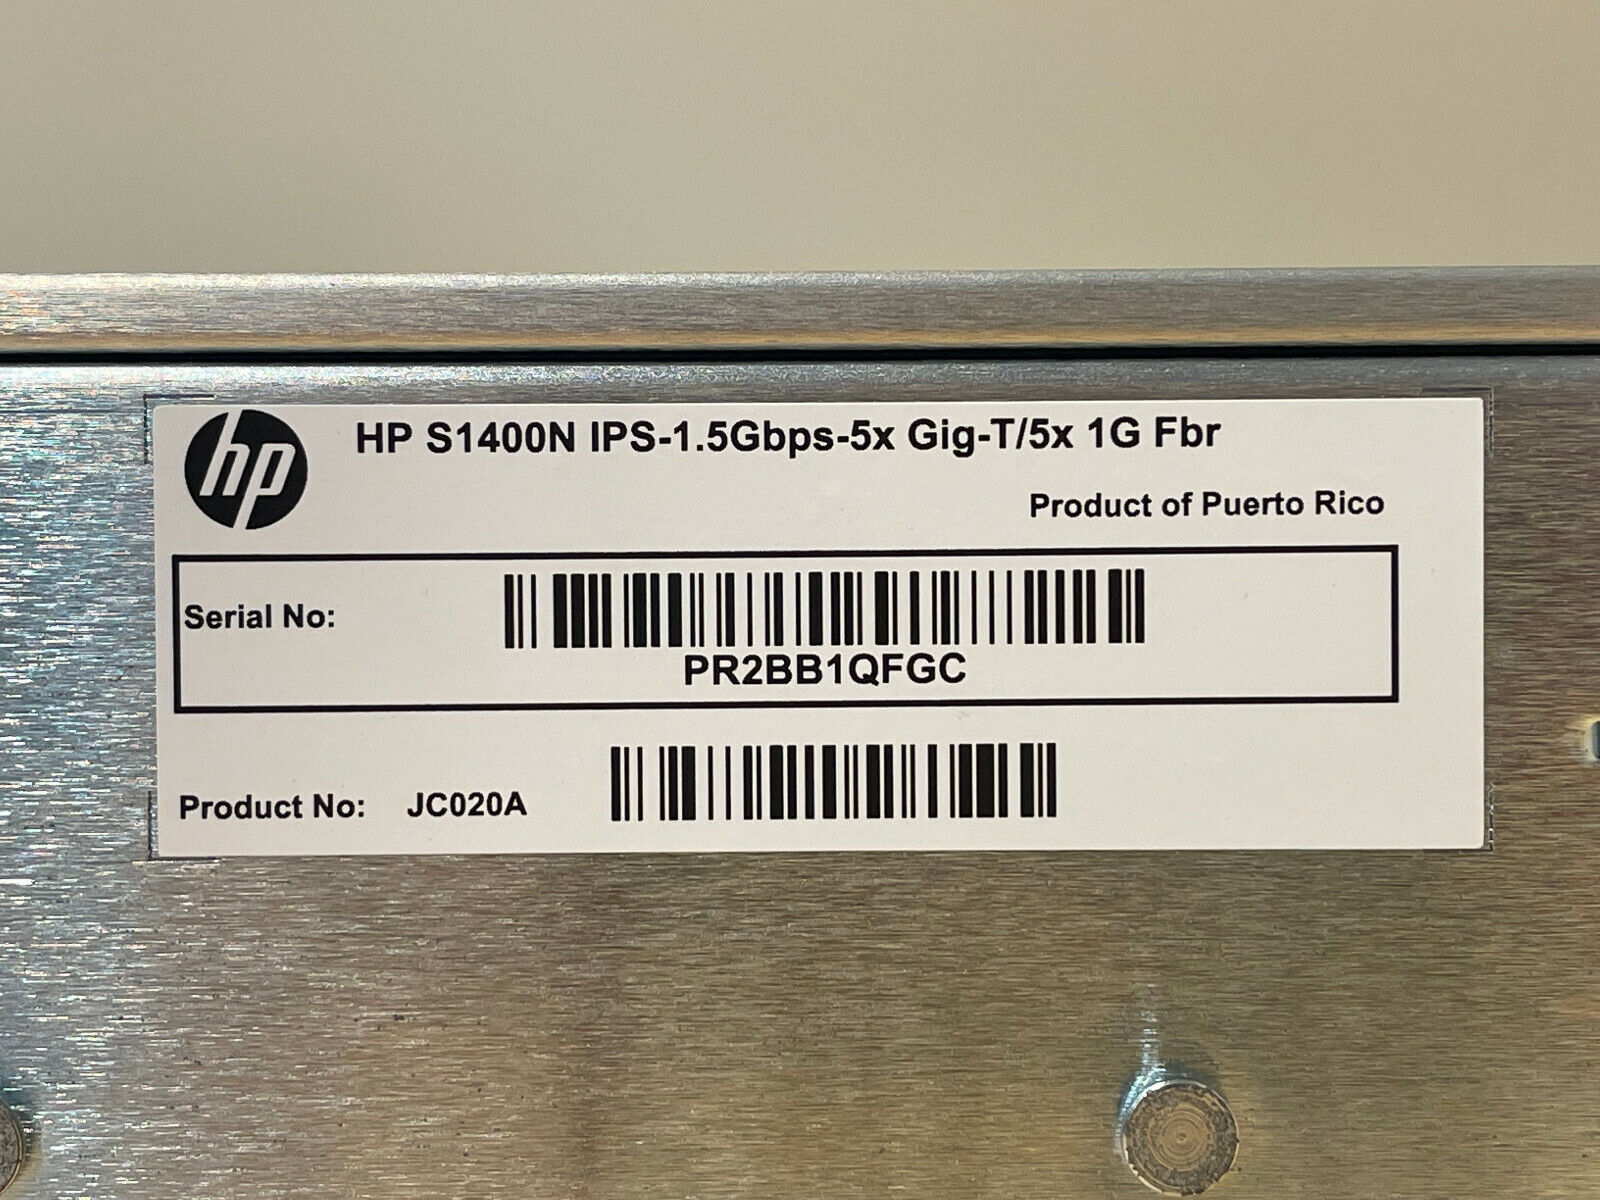 HP JC021A TippingPoint S1400N IPS 2500N-50R1-6006 Intrustion Prevention System 10x RJ45 10x SFP 2x PSU.